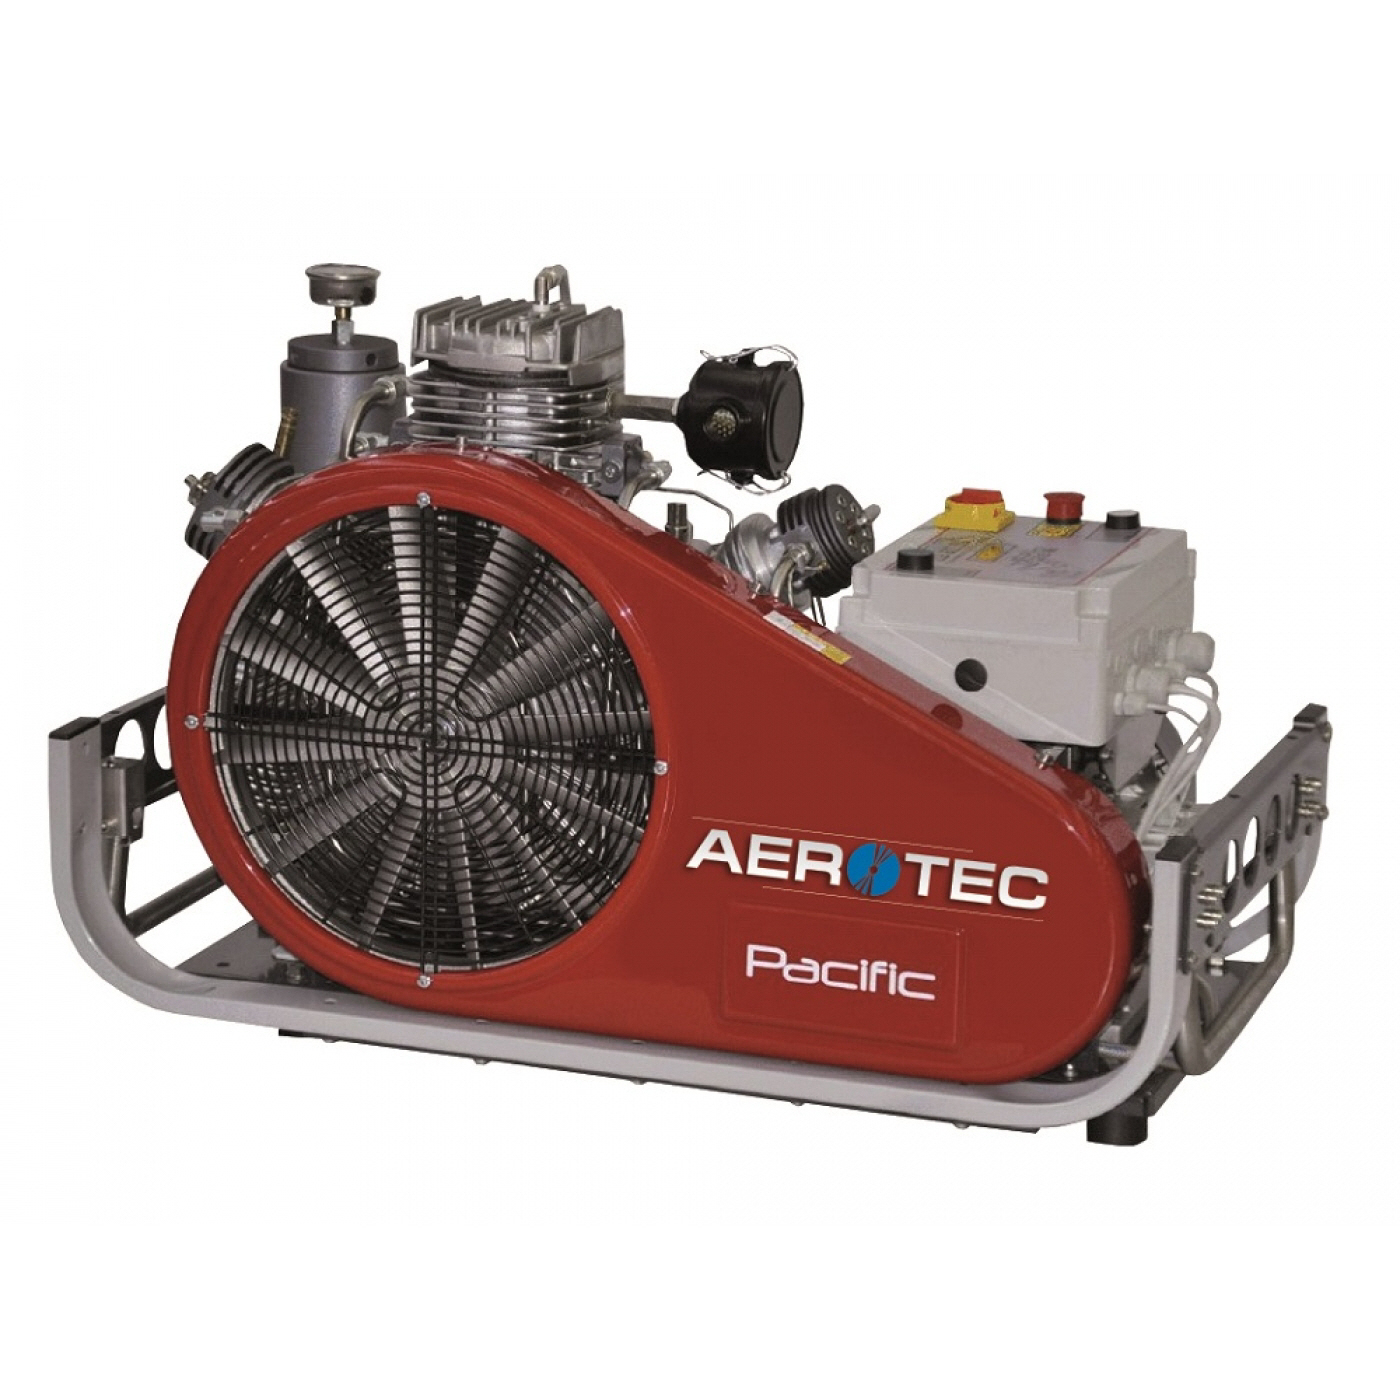 AEROTEC Kolbenkompressor PACIFIC E 23 - 330 bar Tauchkompressoren